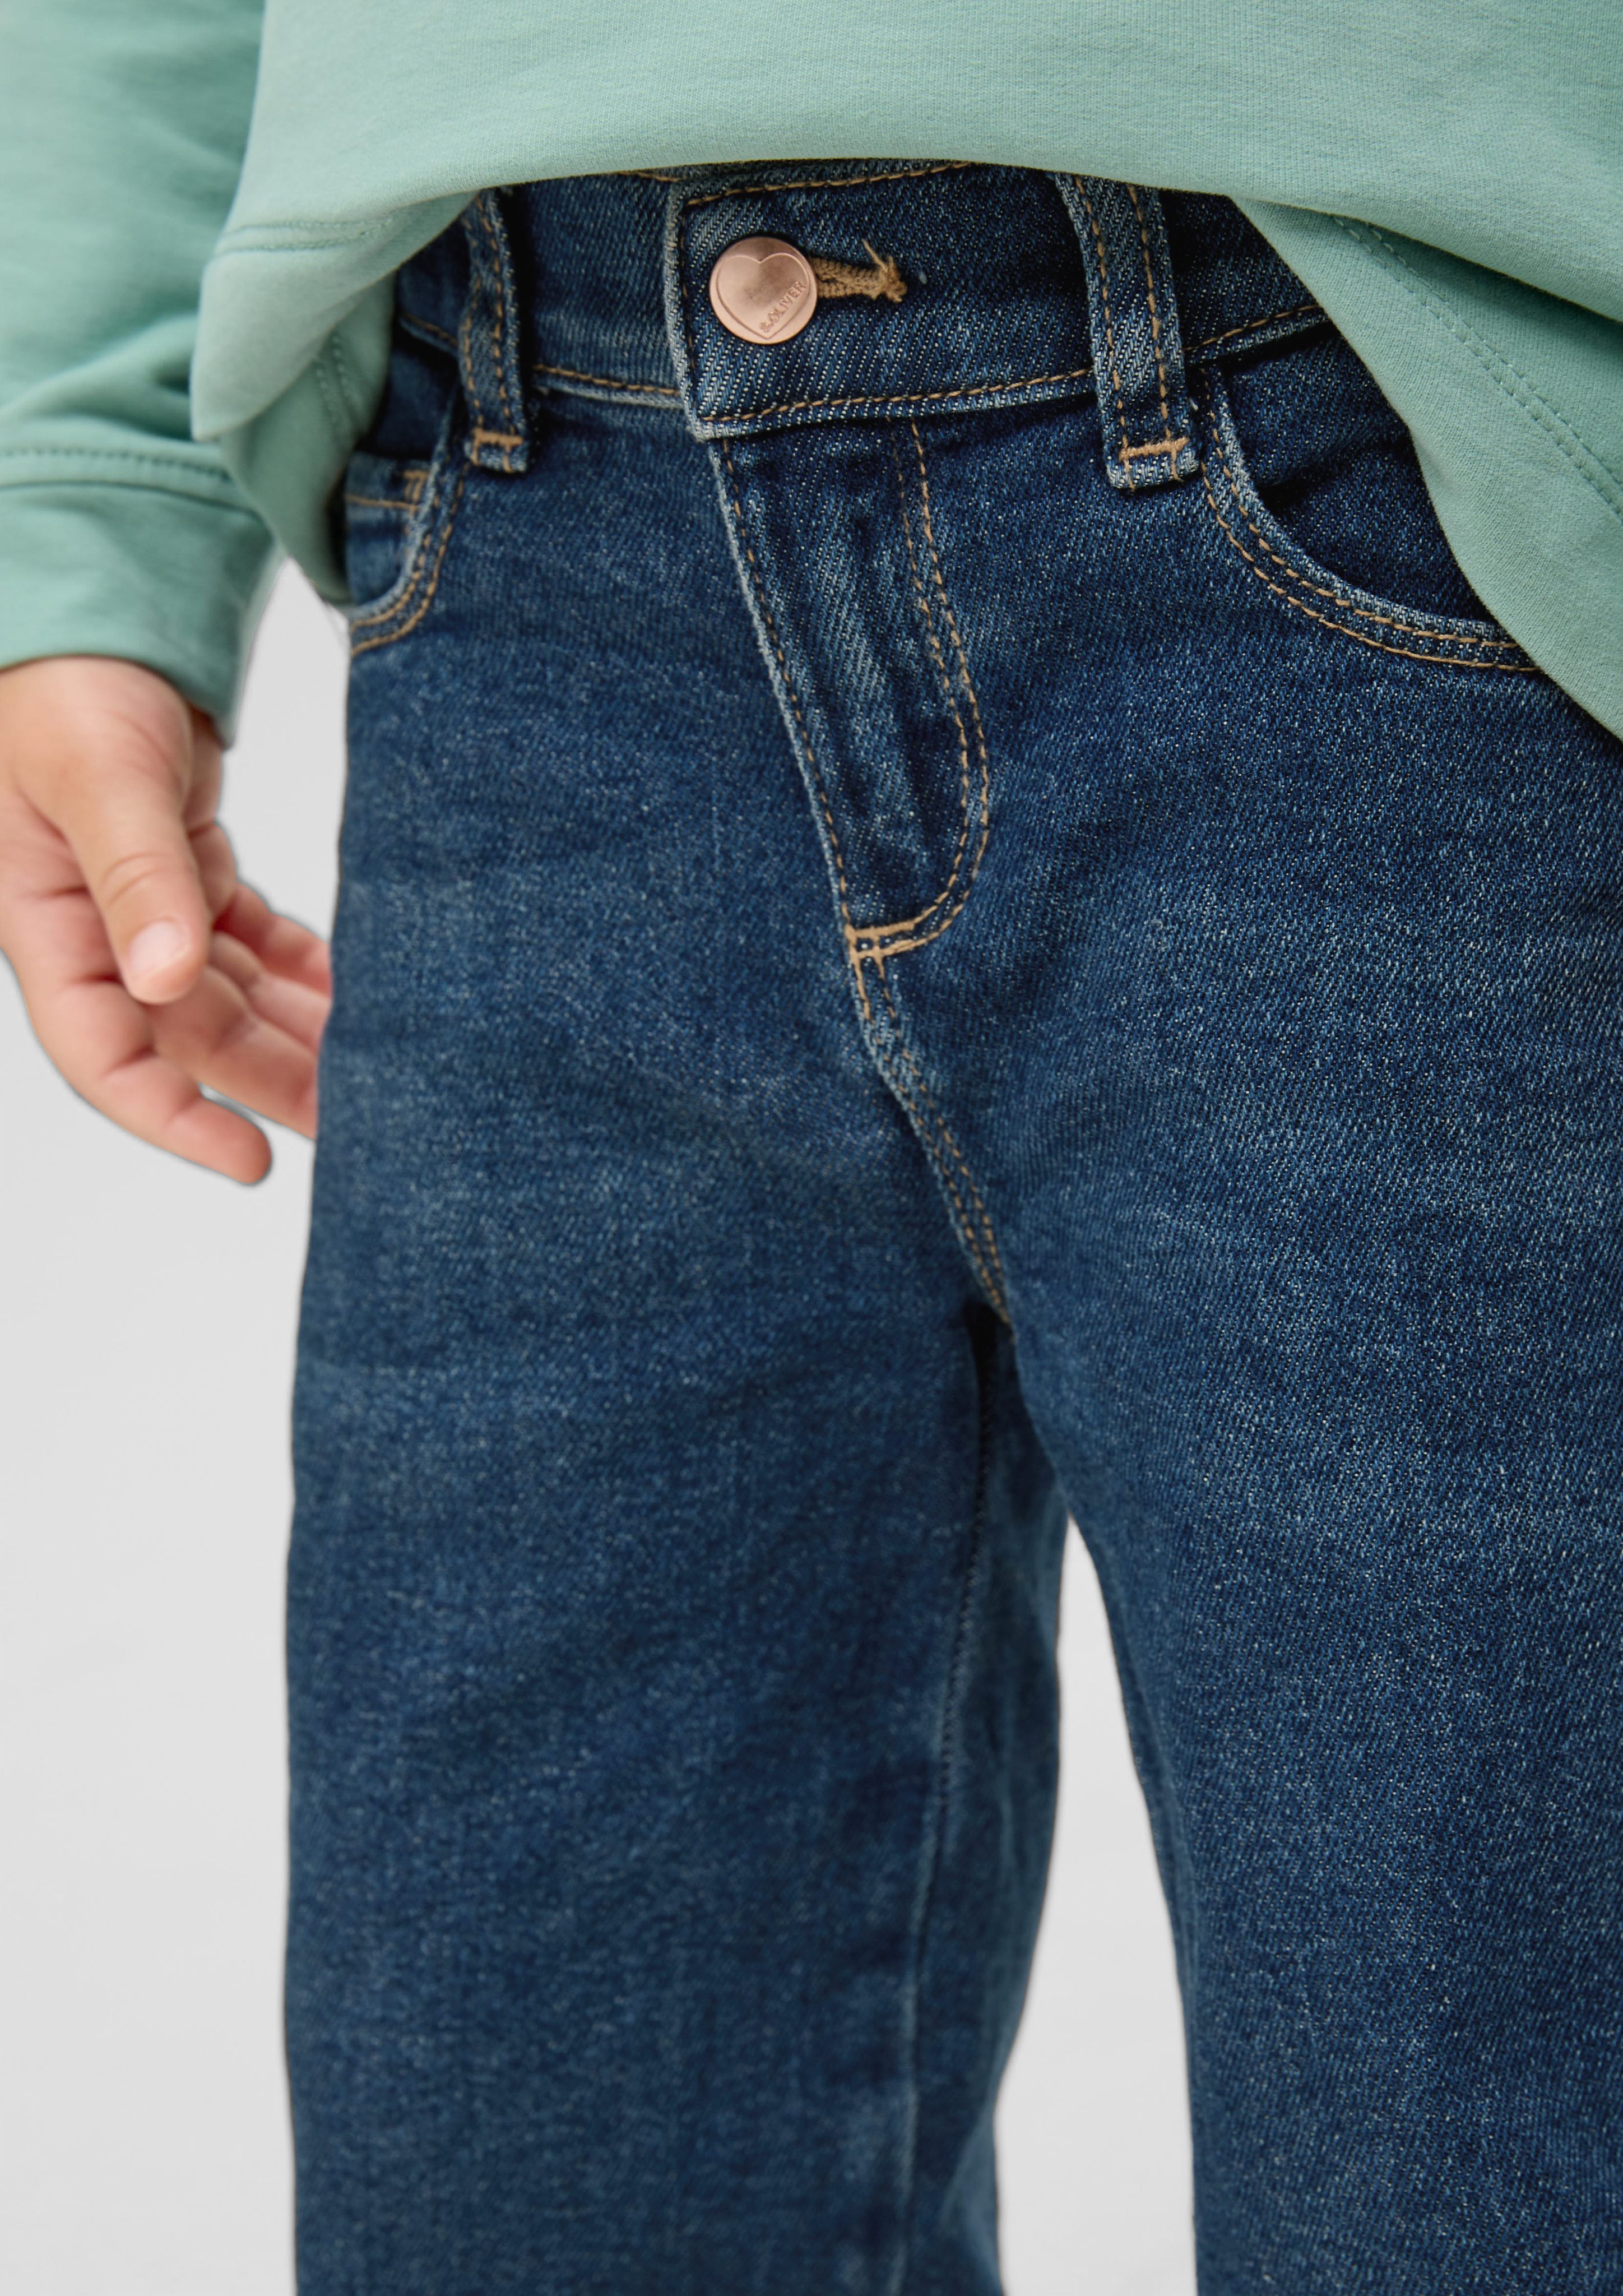 Fit / Leg Mid Rise / Jeans Wide / Weitenregulierung Waschung, Stoffhose / Kontrastnähte s.Oliver Regular